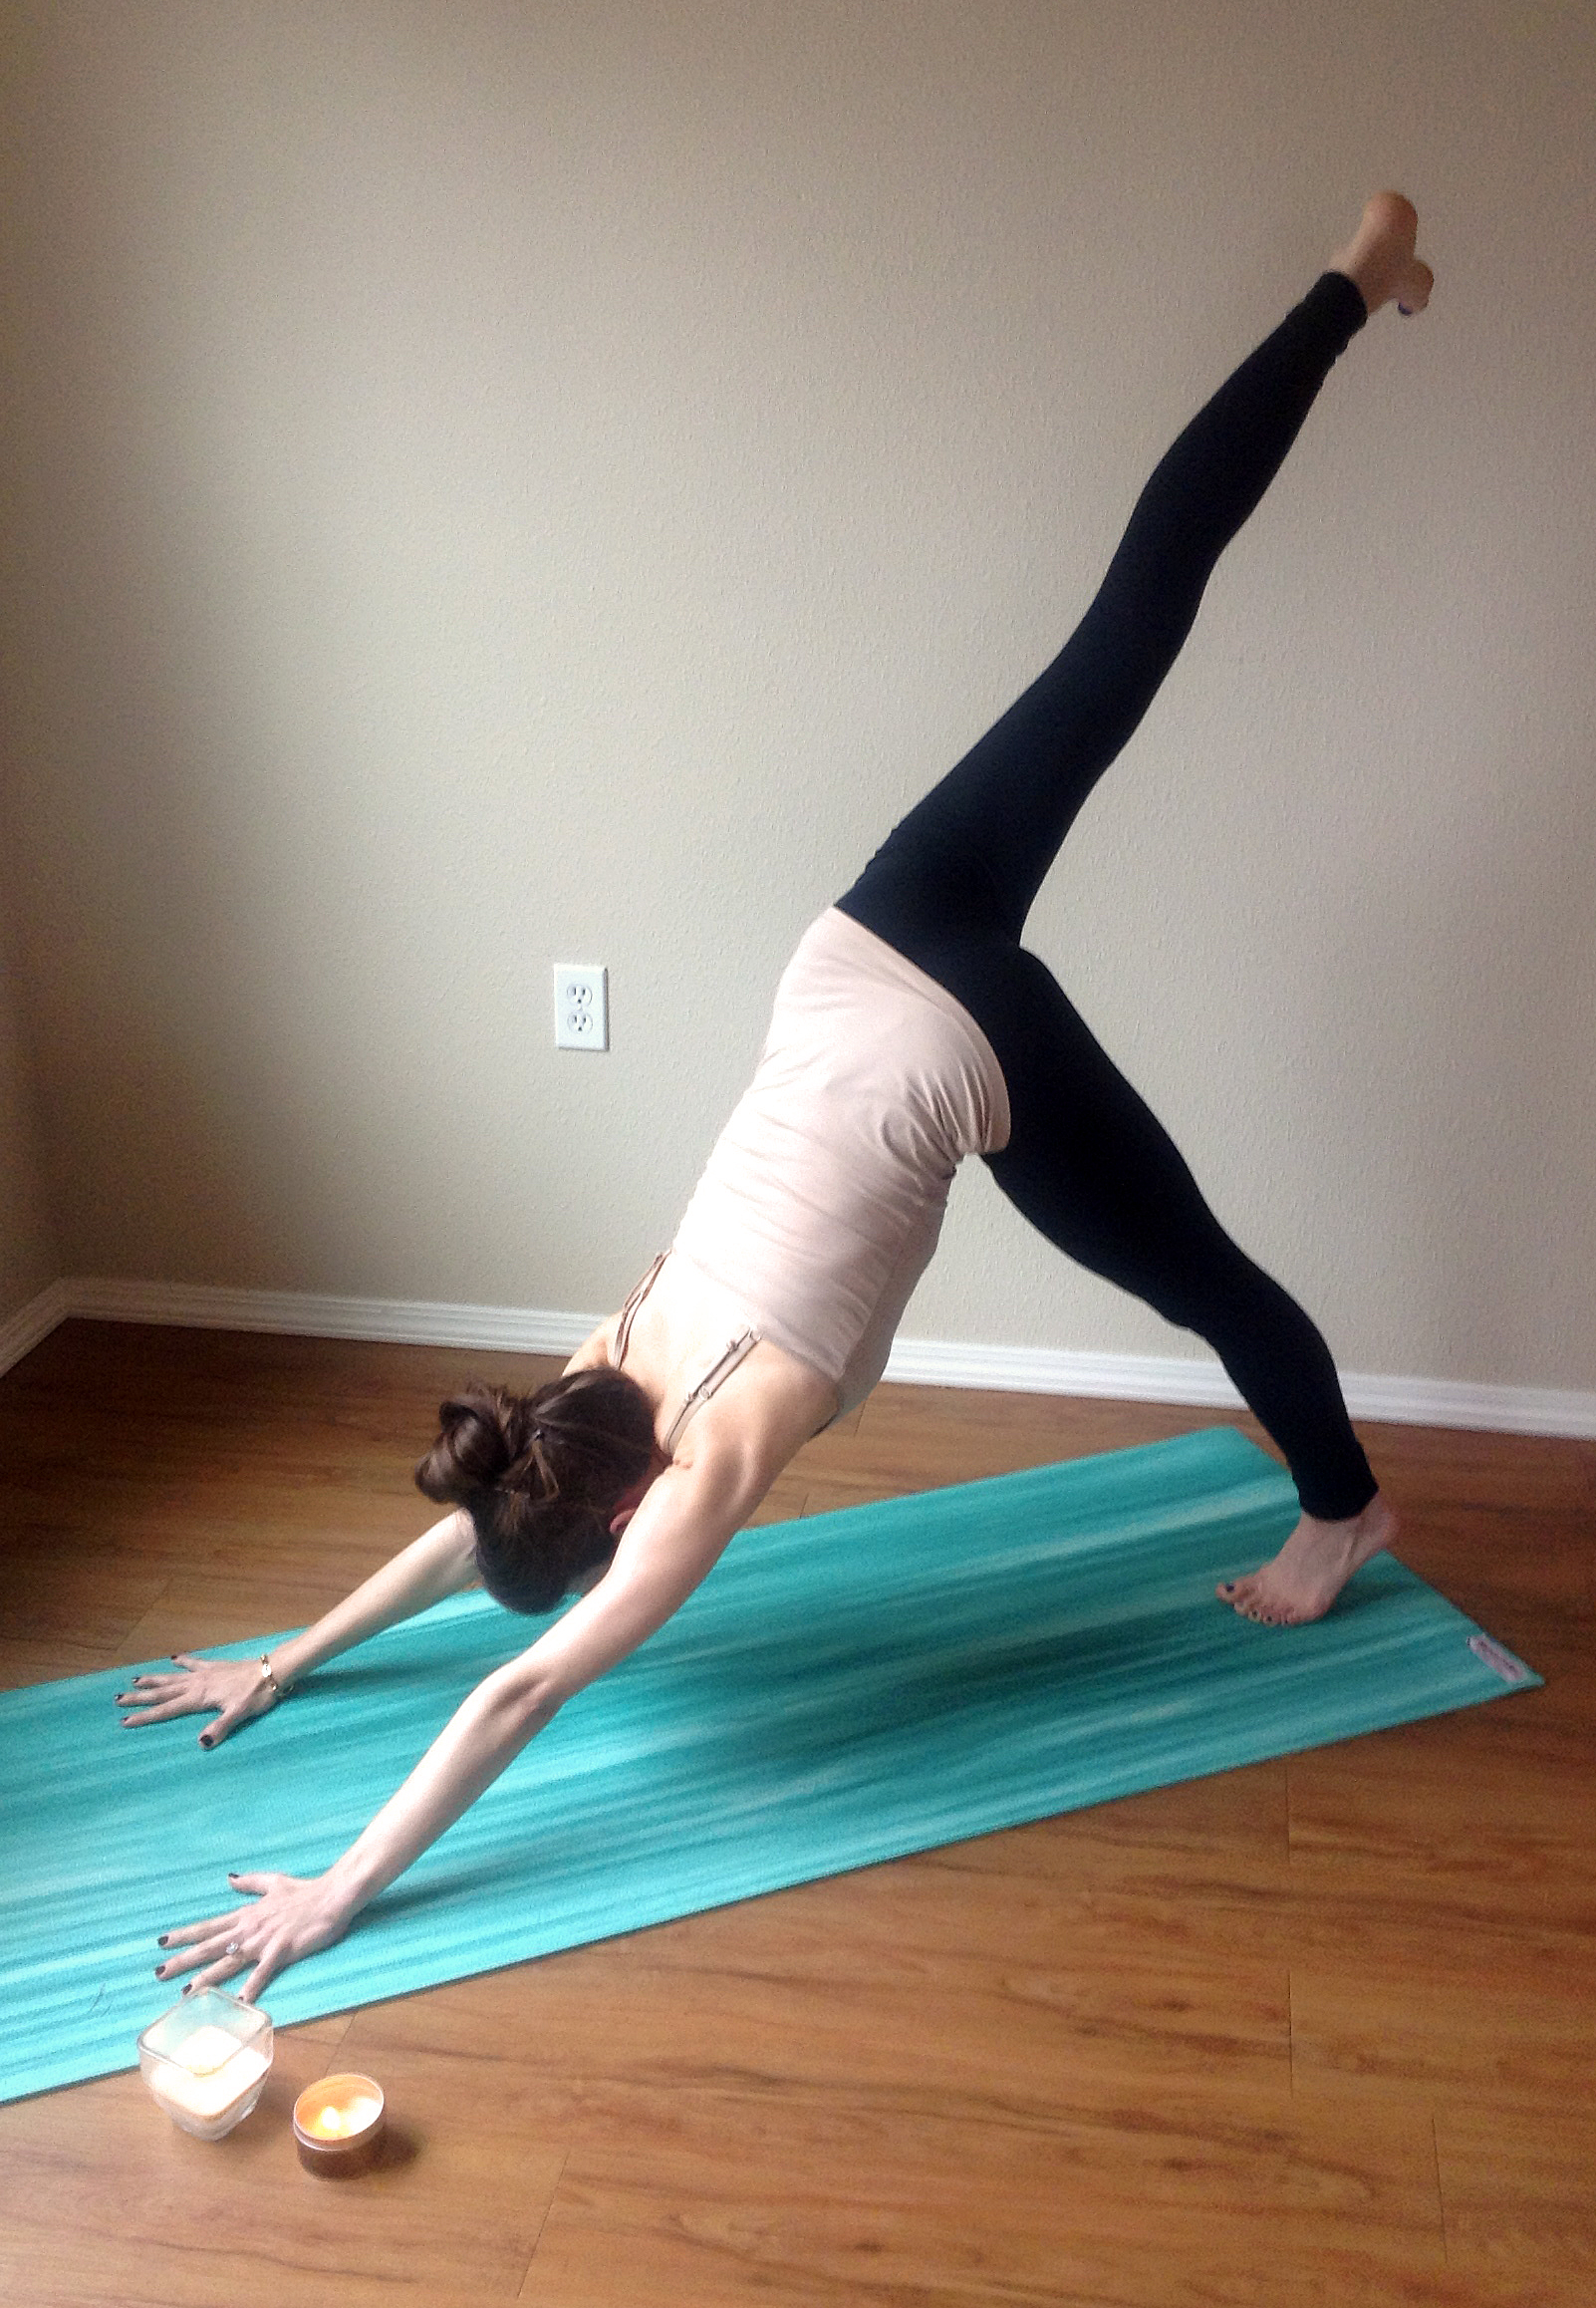 Yoga for fitness: Best yoga asanas for strength, flexibility and balance